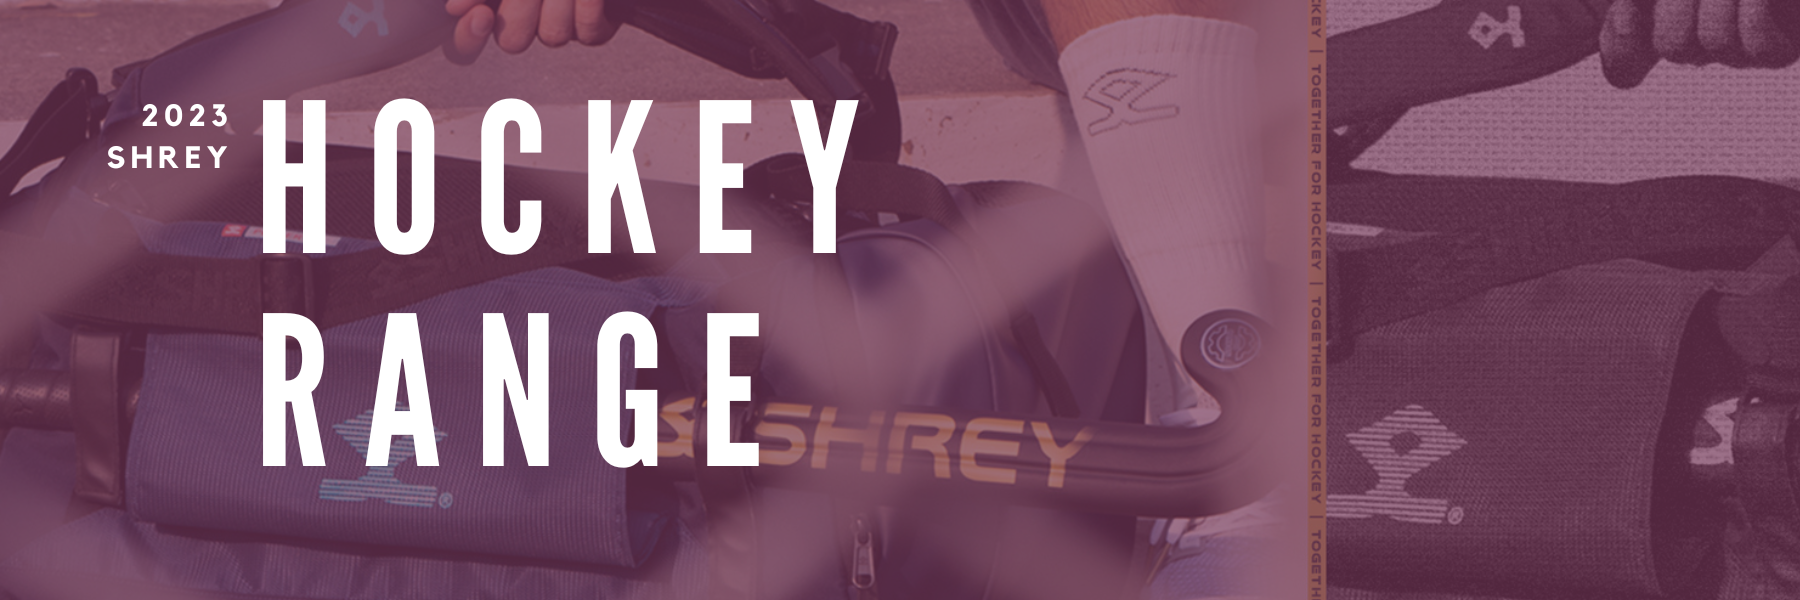 The 2023 Shrey Hockey Range